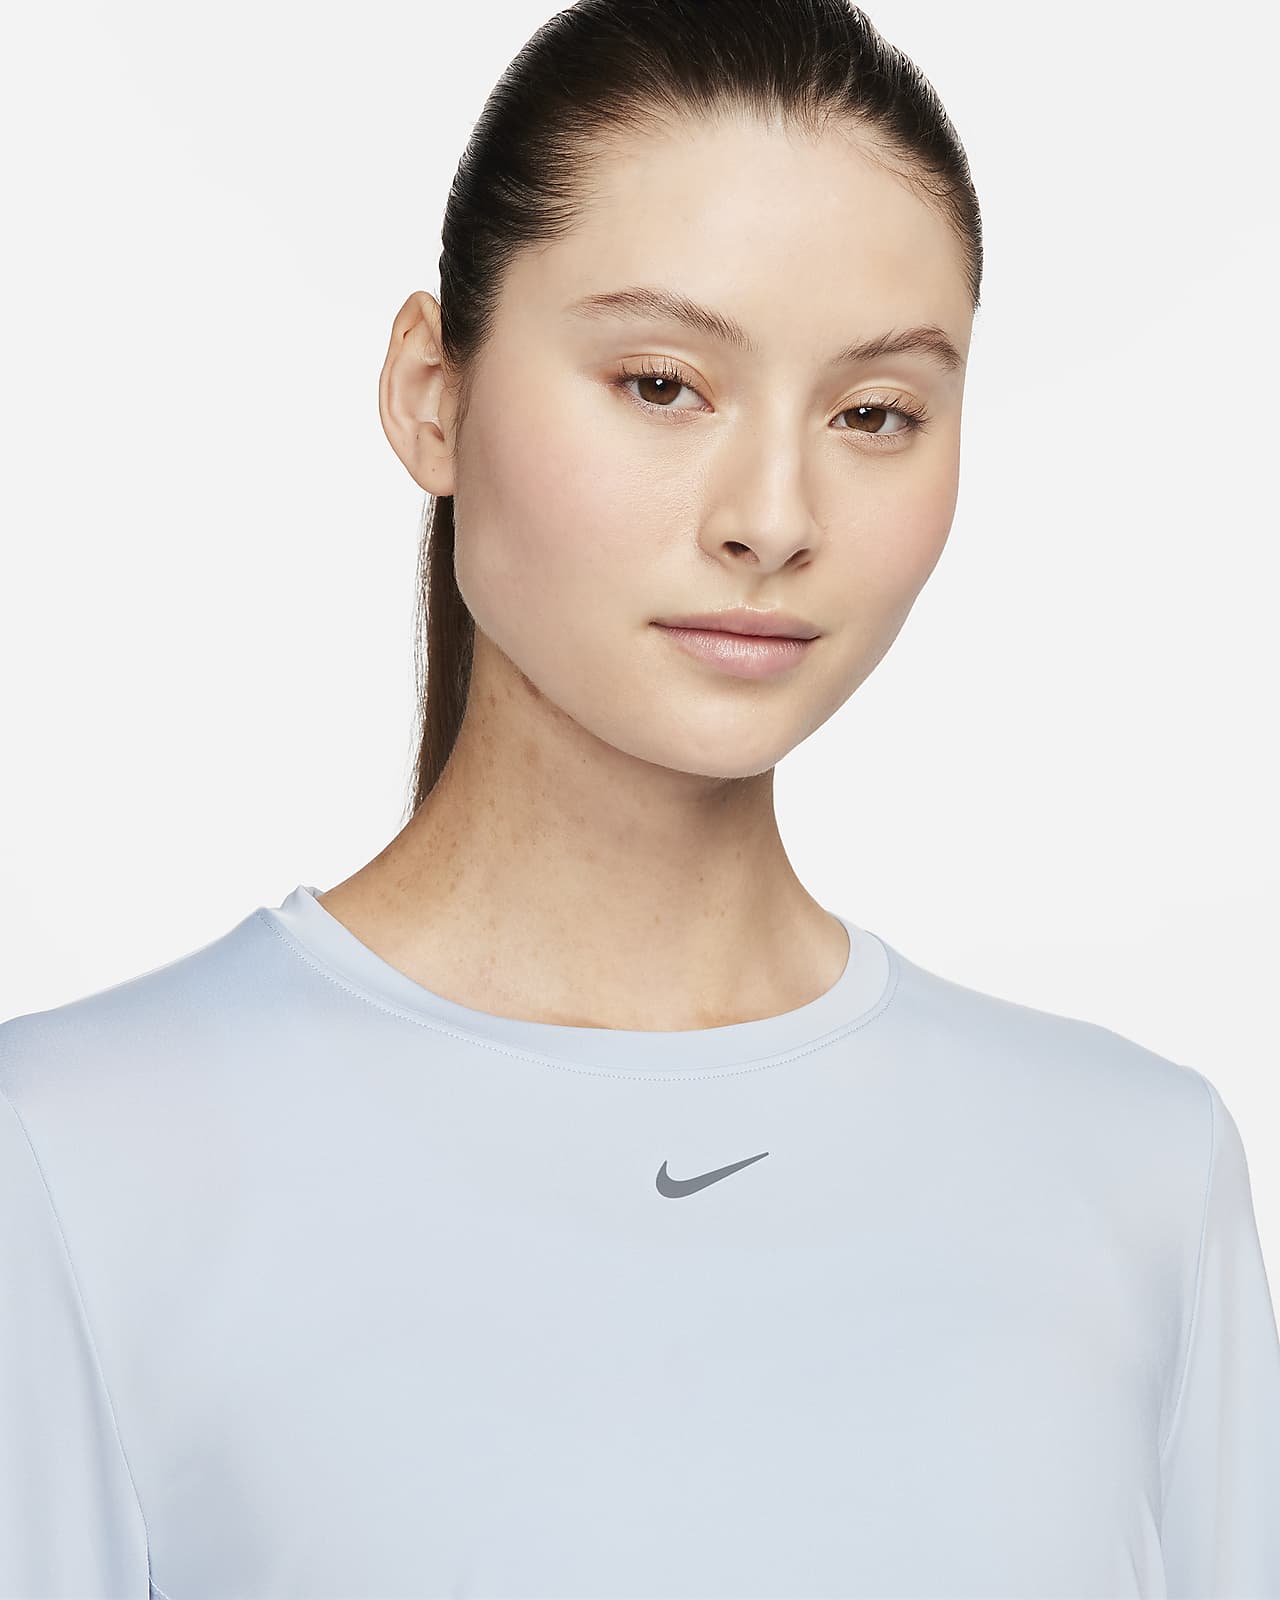 Jordan Sport Women's Long-Sleeve Top. Nike LU